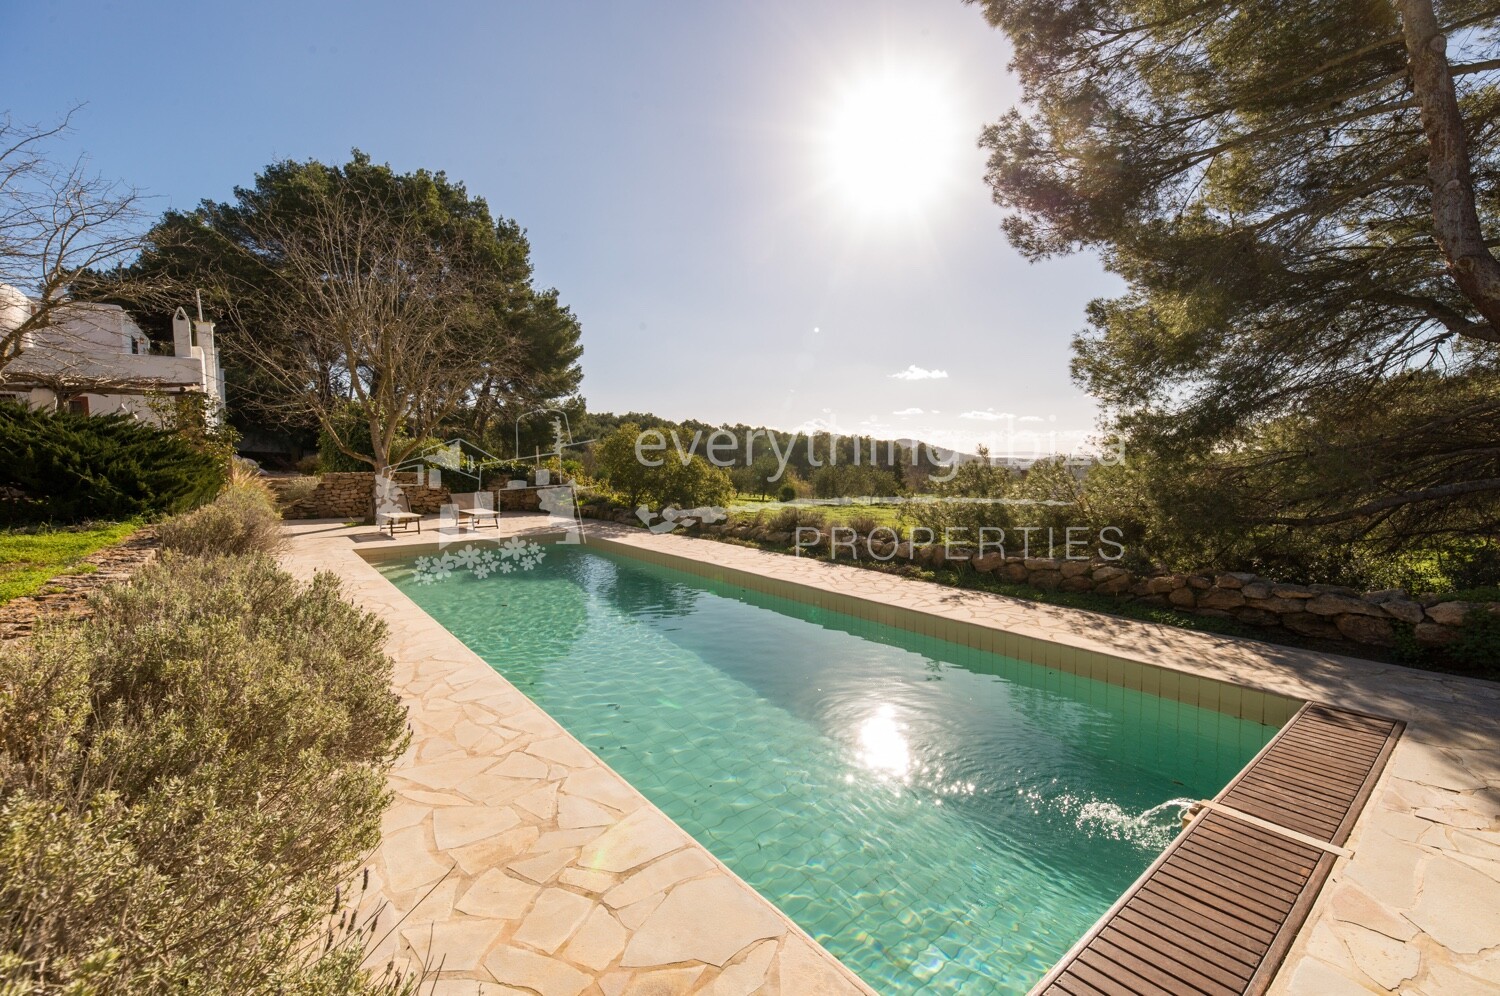 Beautiful Countryside Finca Near Santa Gertrudis, ref. 1485, for sale in Ibiza by everything ibiza Properties